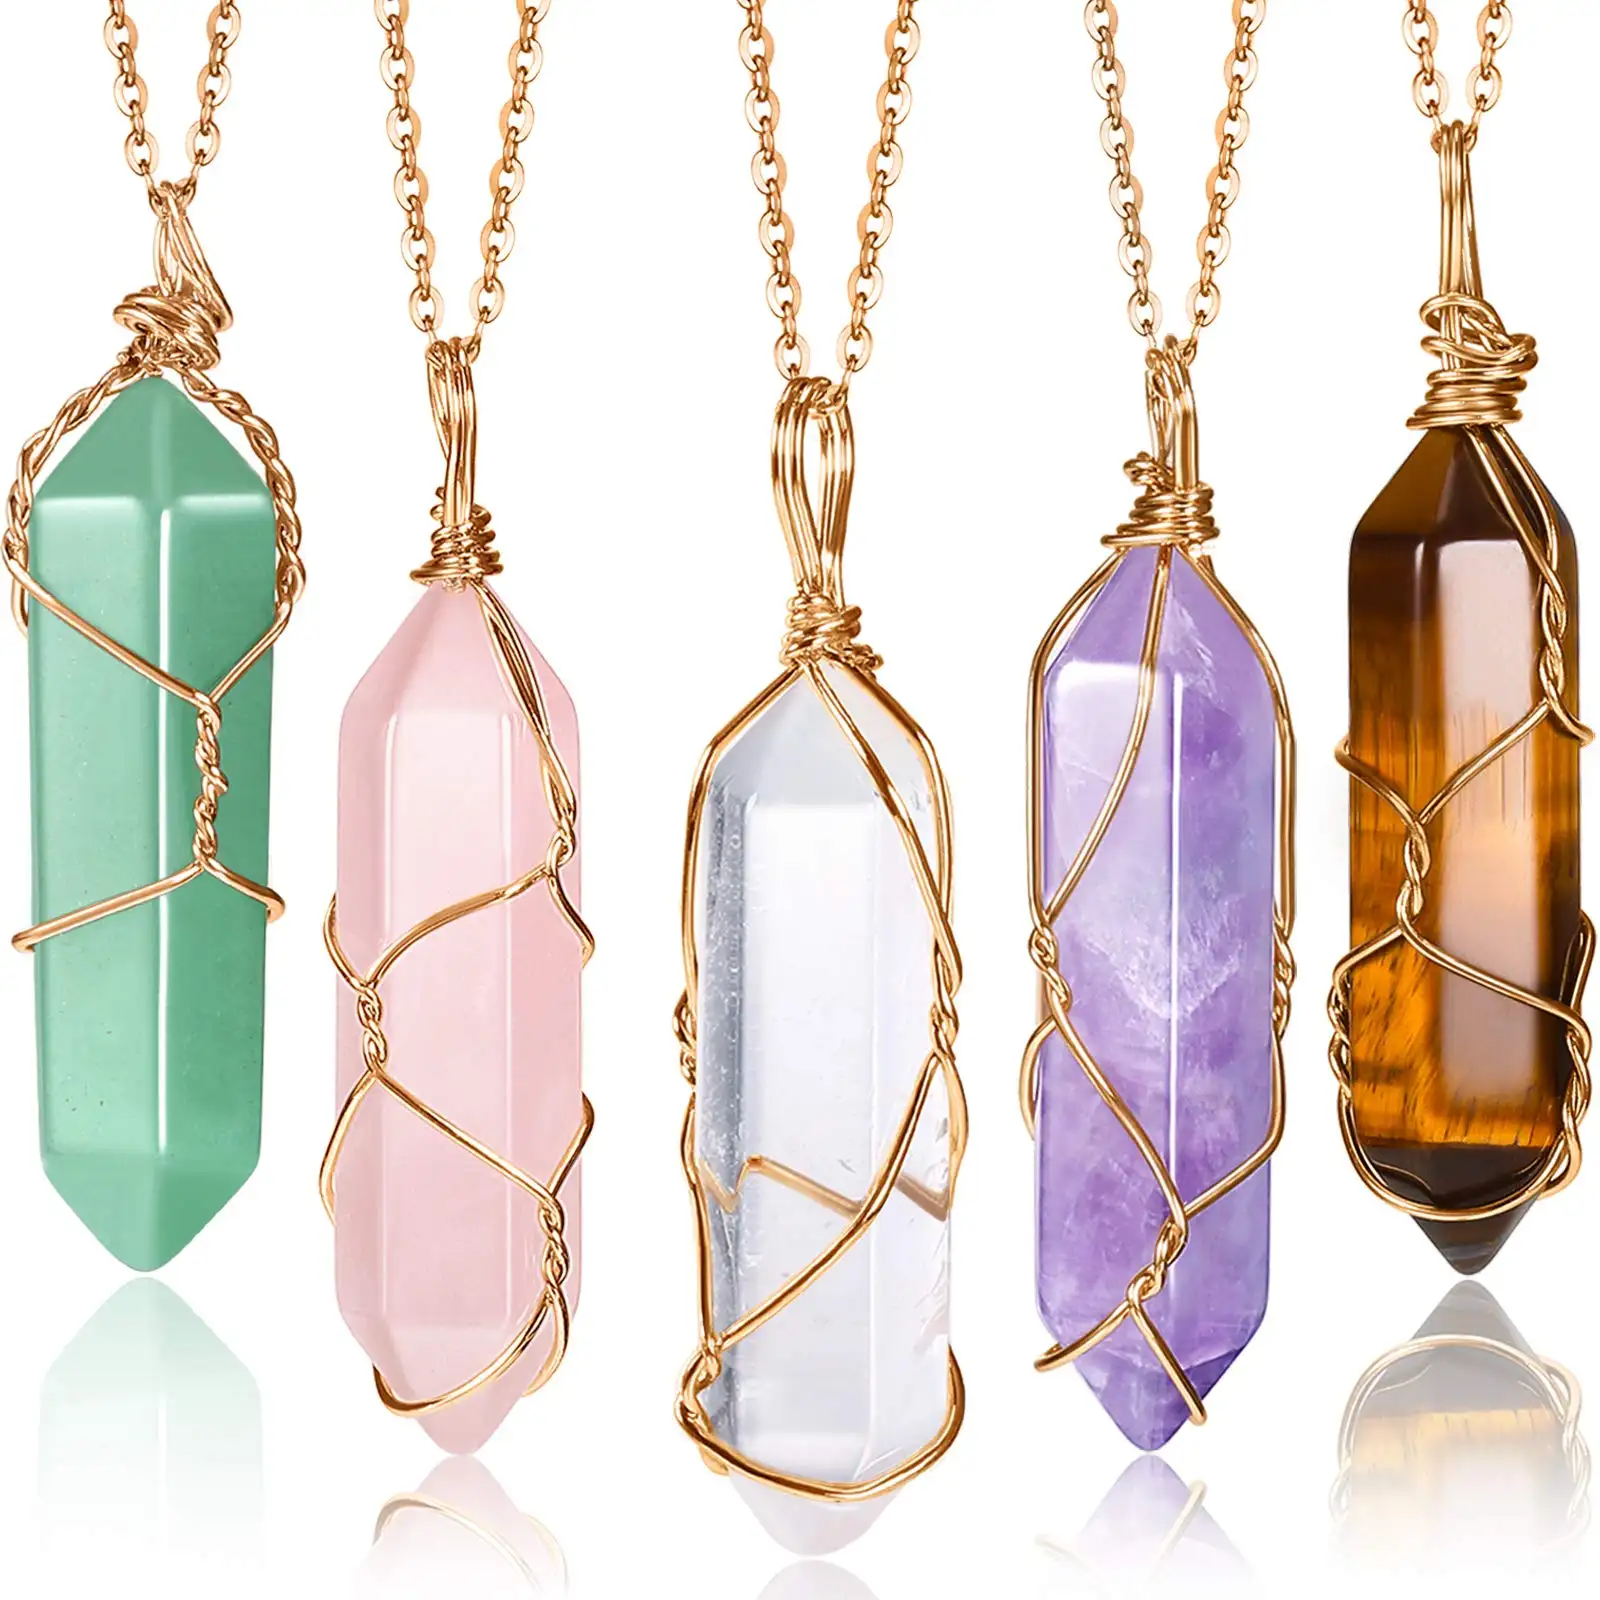 Hexagonal Crystal Stone Necklace Healing Stones Spiritual Pendant Natural Gemstone Jewelry for Women Girls